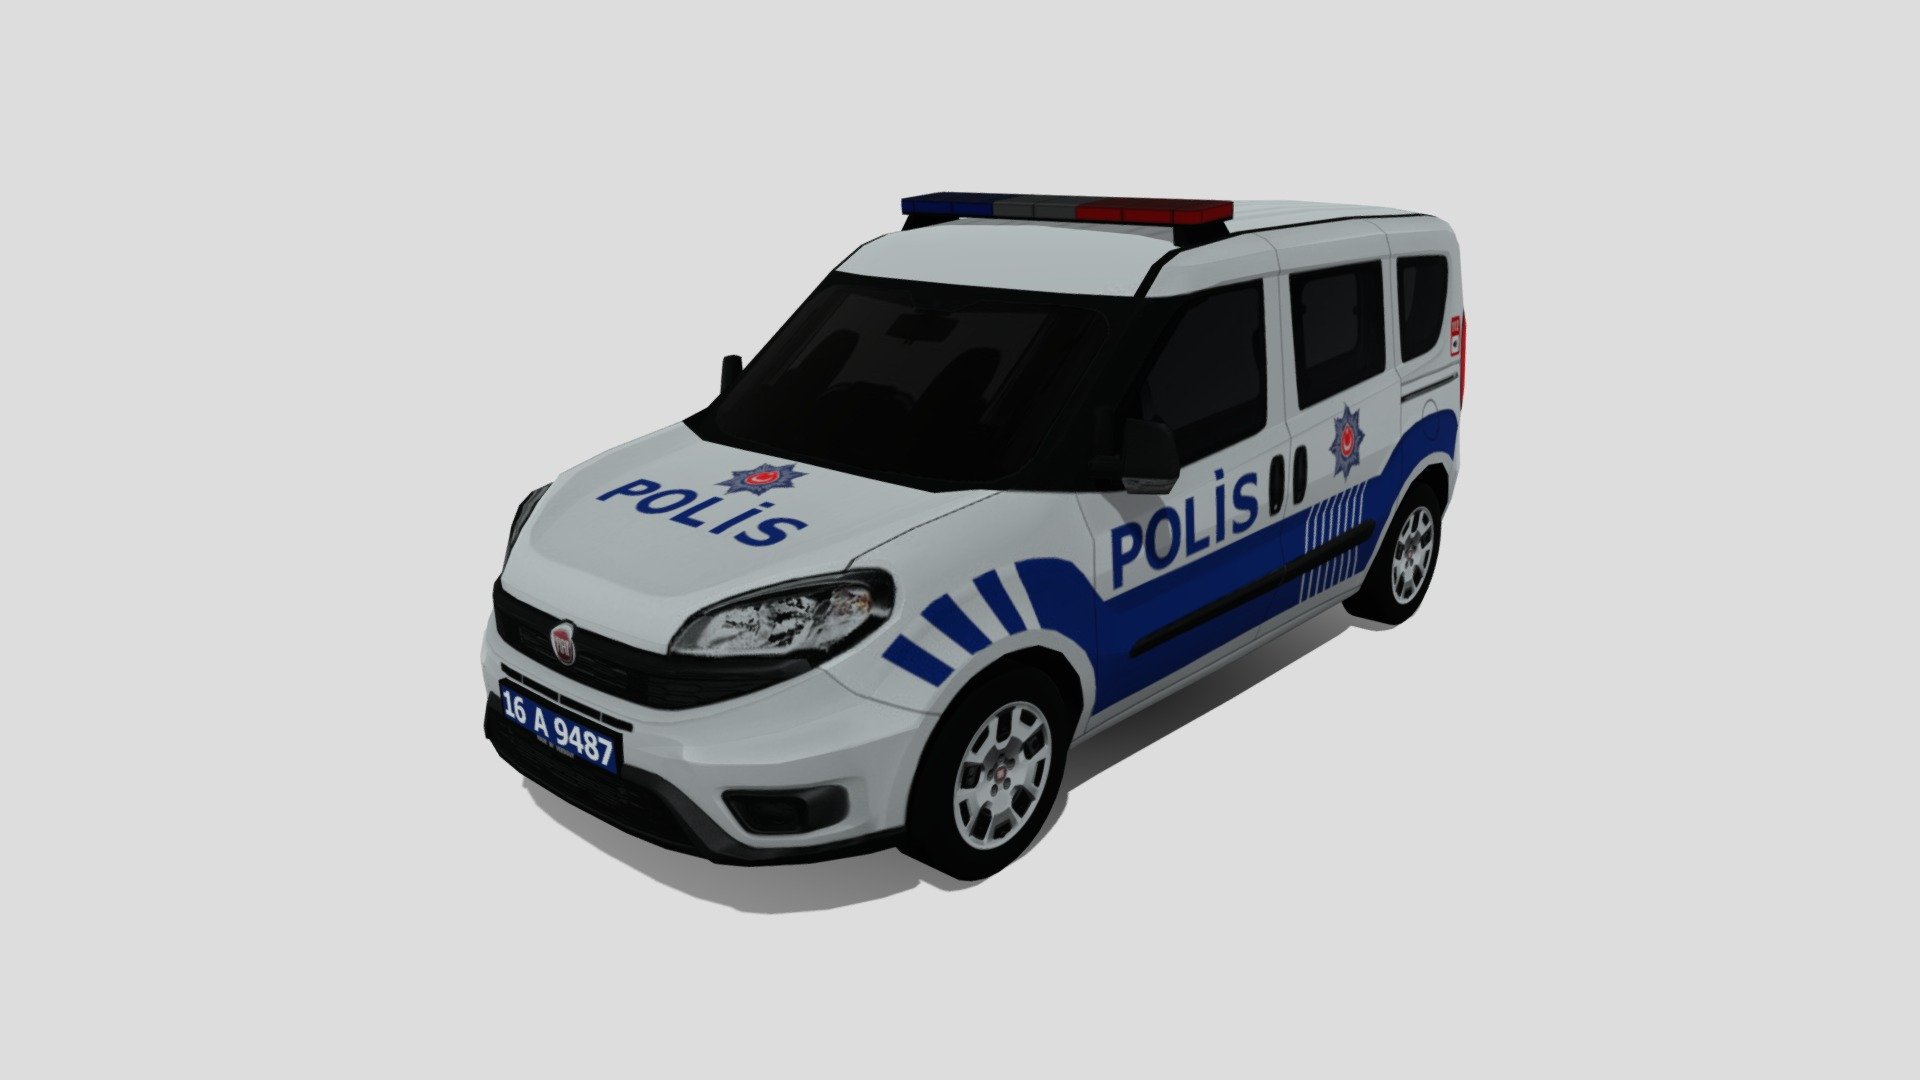 2018 Fiat Doblo Police (Turkey/Türkiye Polis Arabası) by VeesGuy

Tris: 3578
Texture: 1024x1024 - 2018 Fiat Doblo Police (Turkey/Türkiye) - 3D model by VeesGuy 3d model